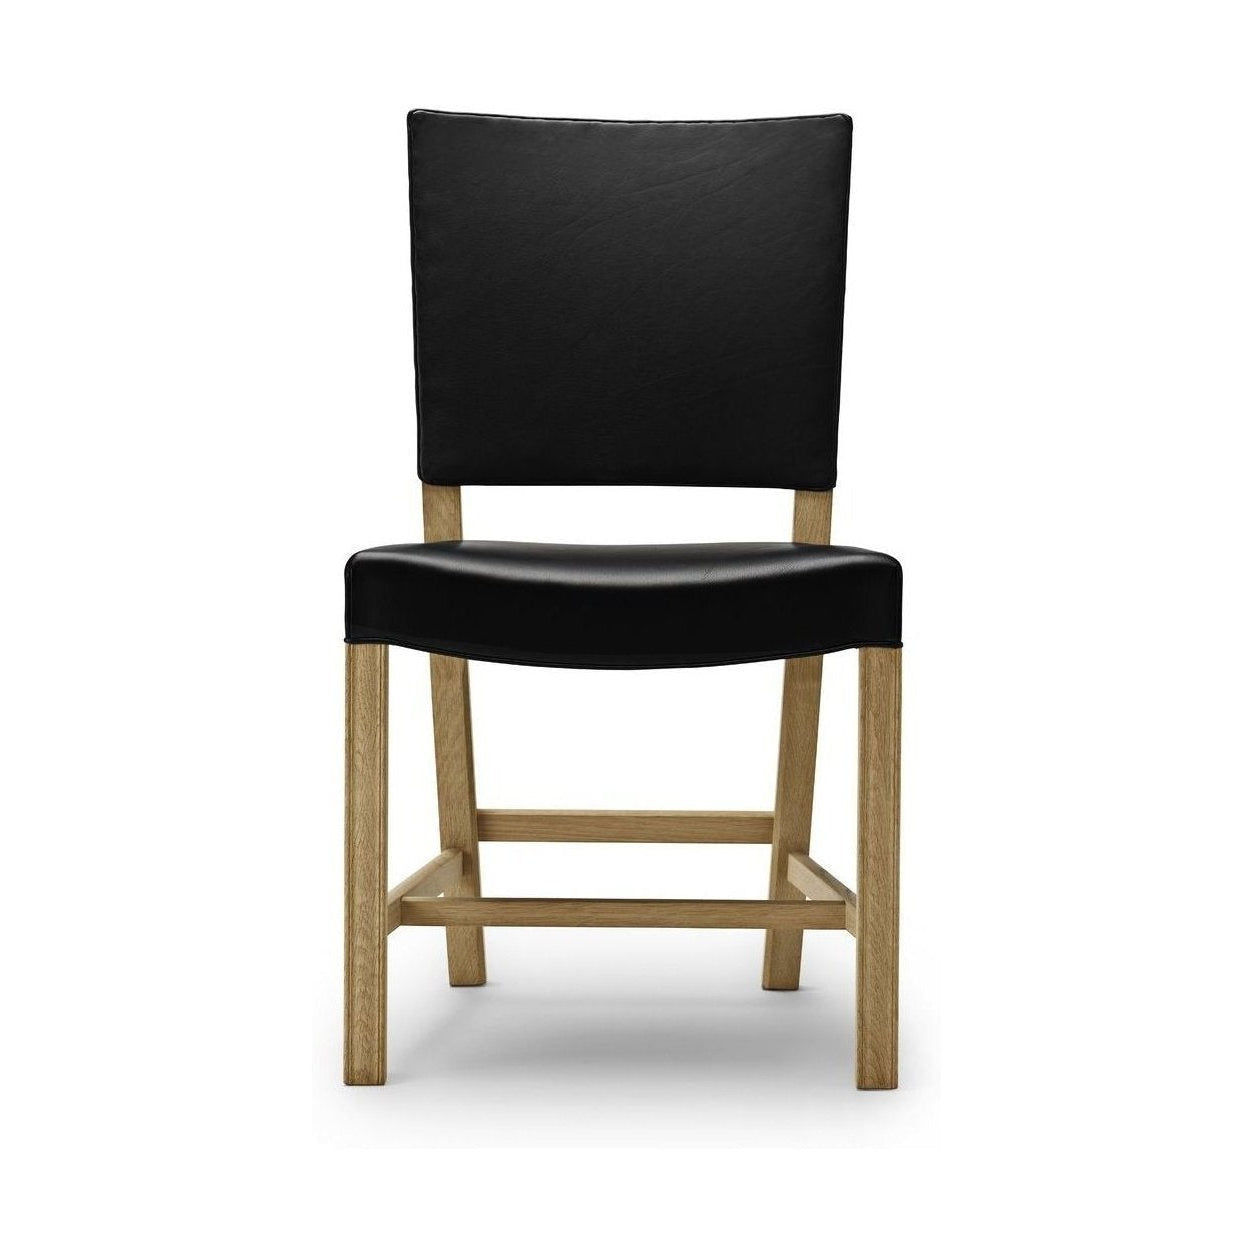 Carl Hansen KK37580 Grote rode stoel, soaped eiken/zwart leer